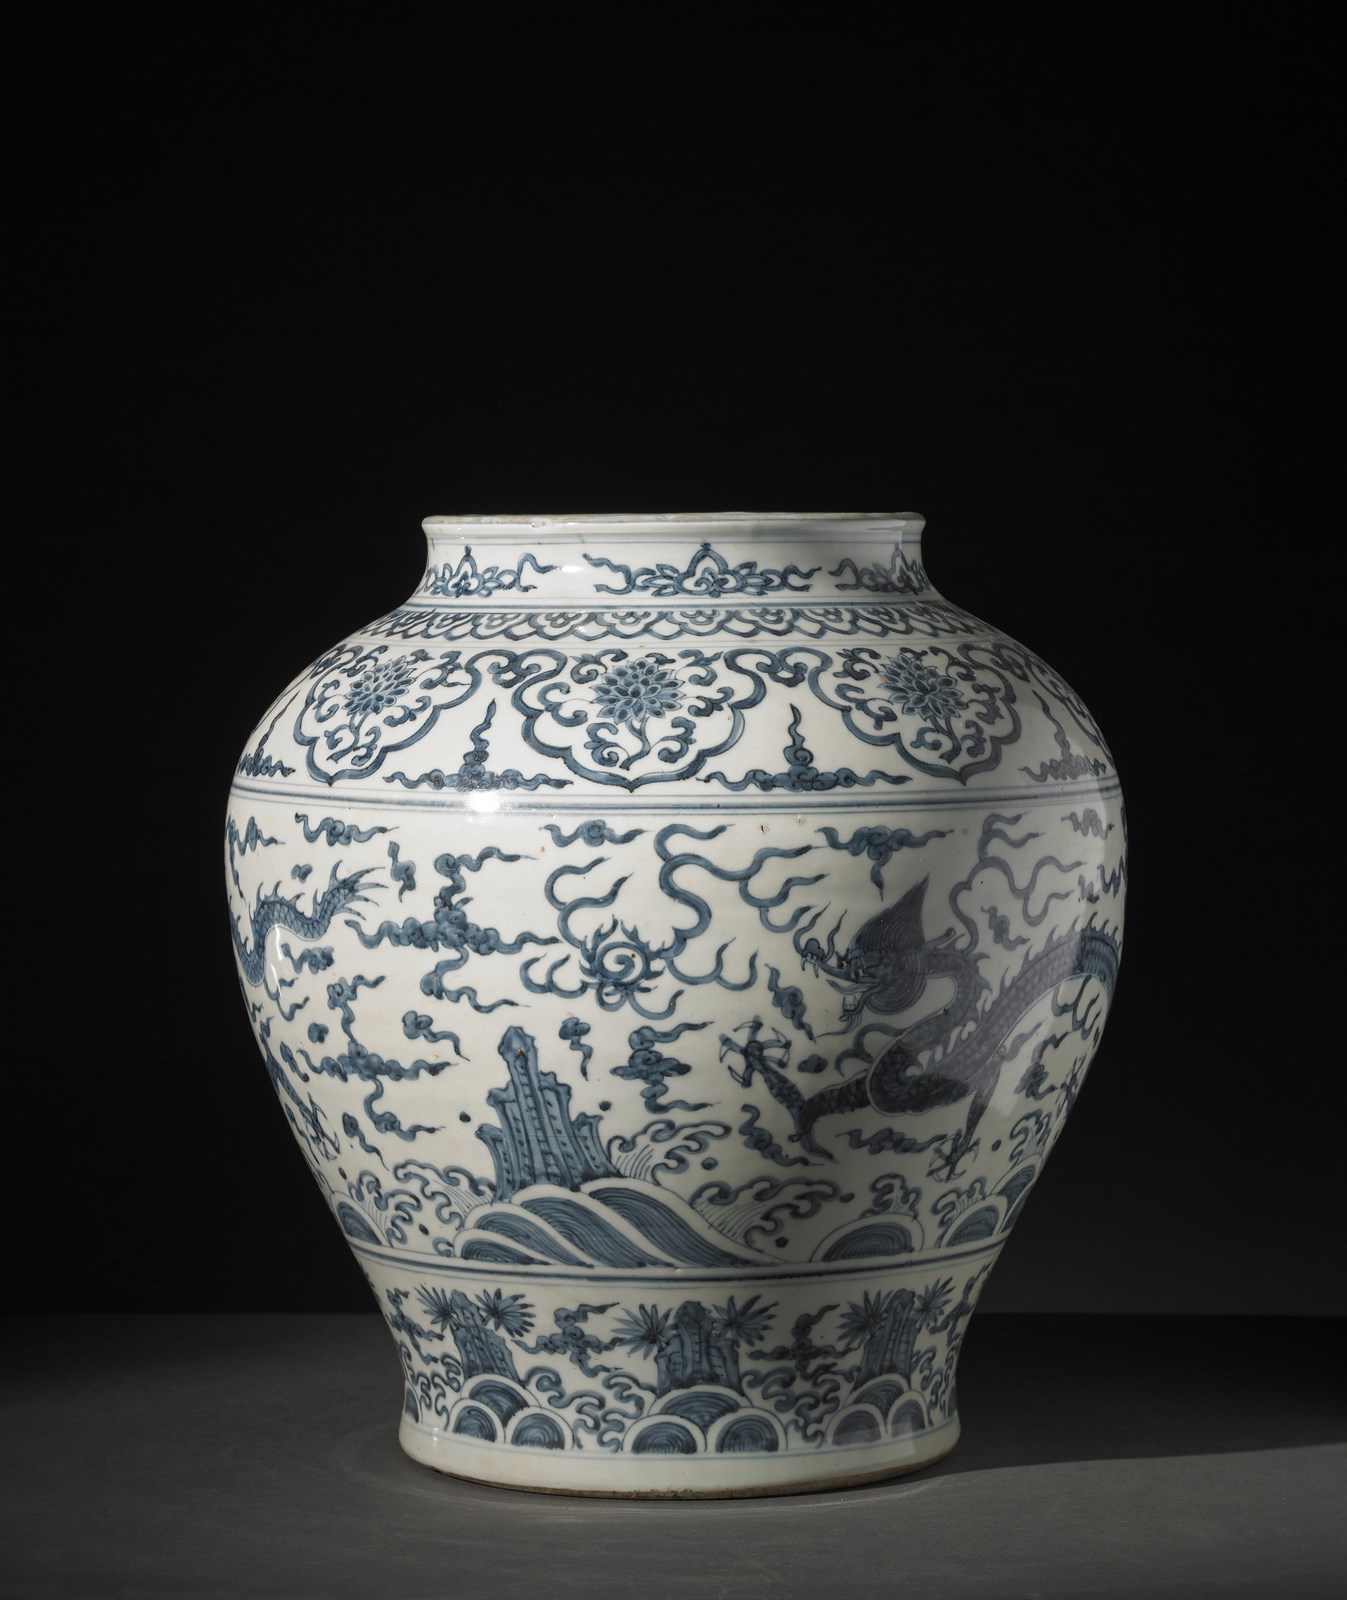 Grande giara bianco/blu
Cina, dinastia Ming, XVI secolo o posteriore (Arte Cinese )